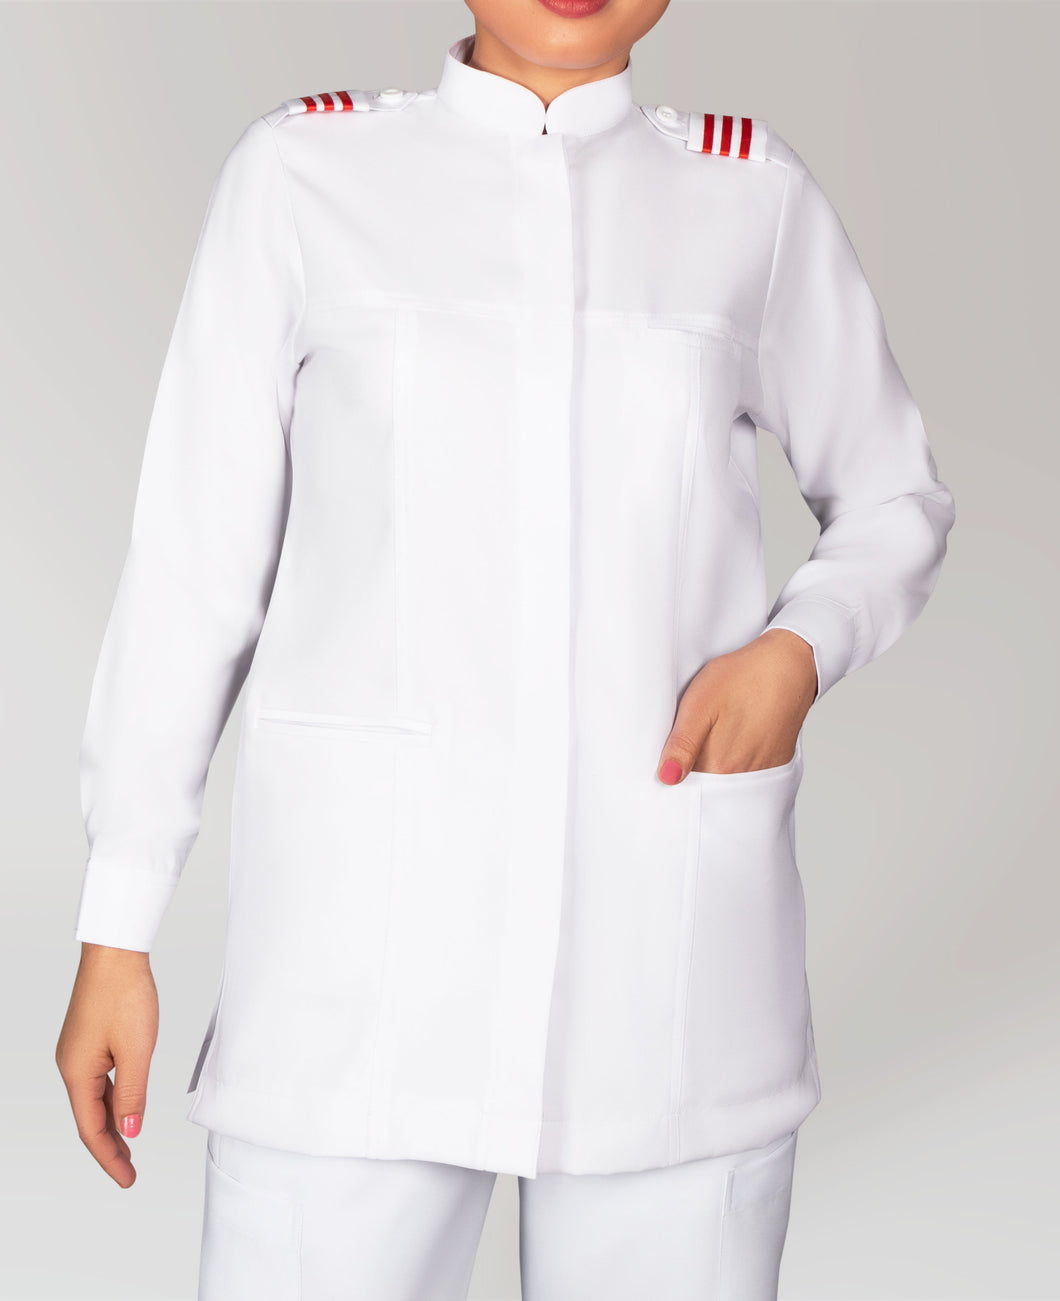 Women Student Nurse Uniform Liquid Repellent